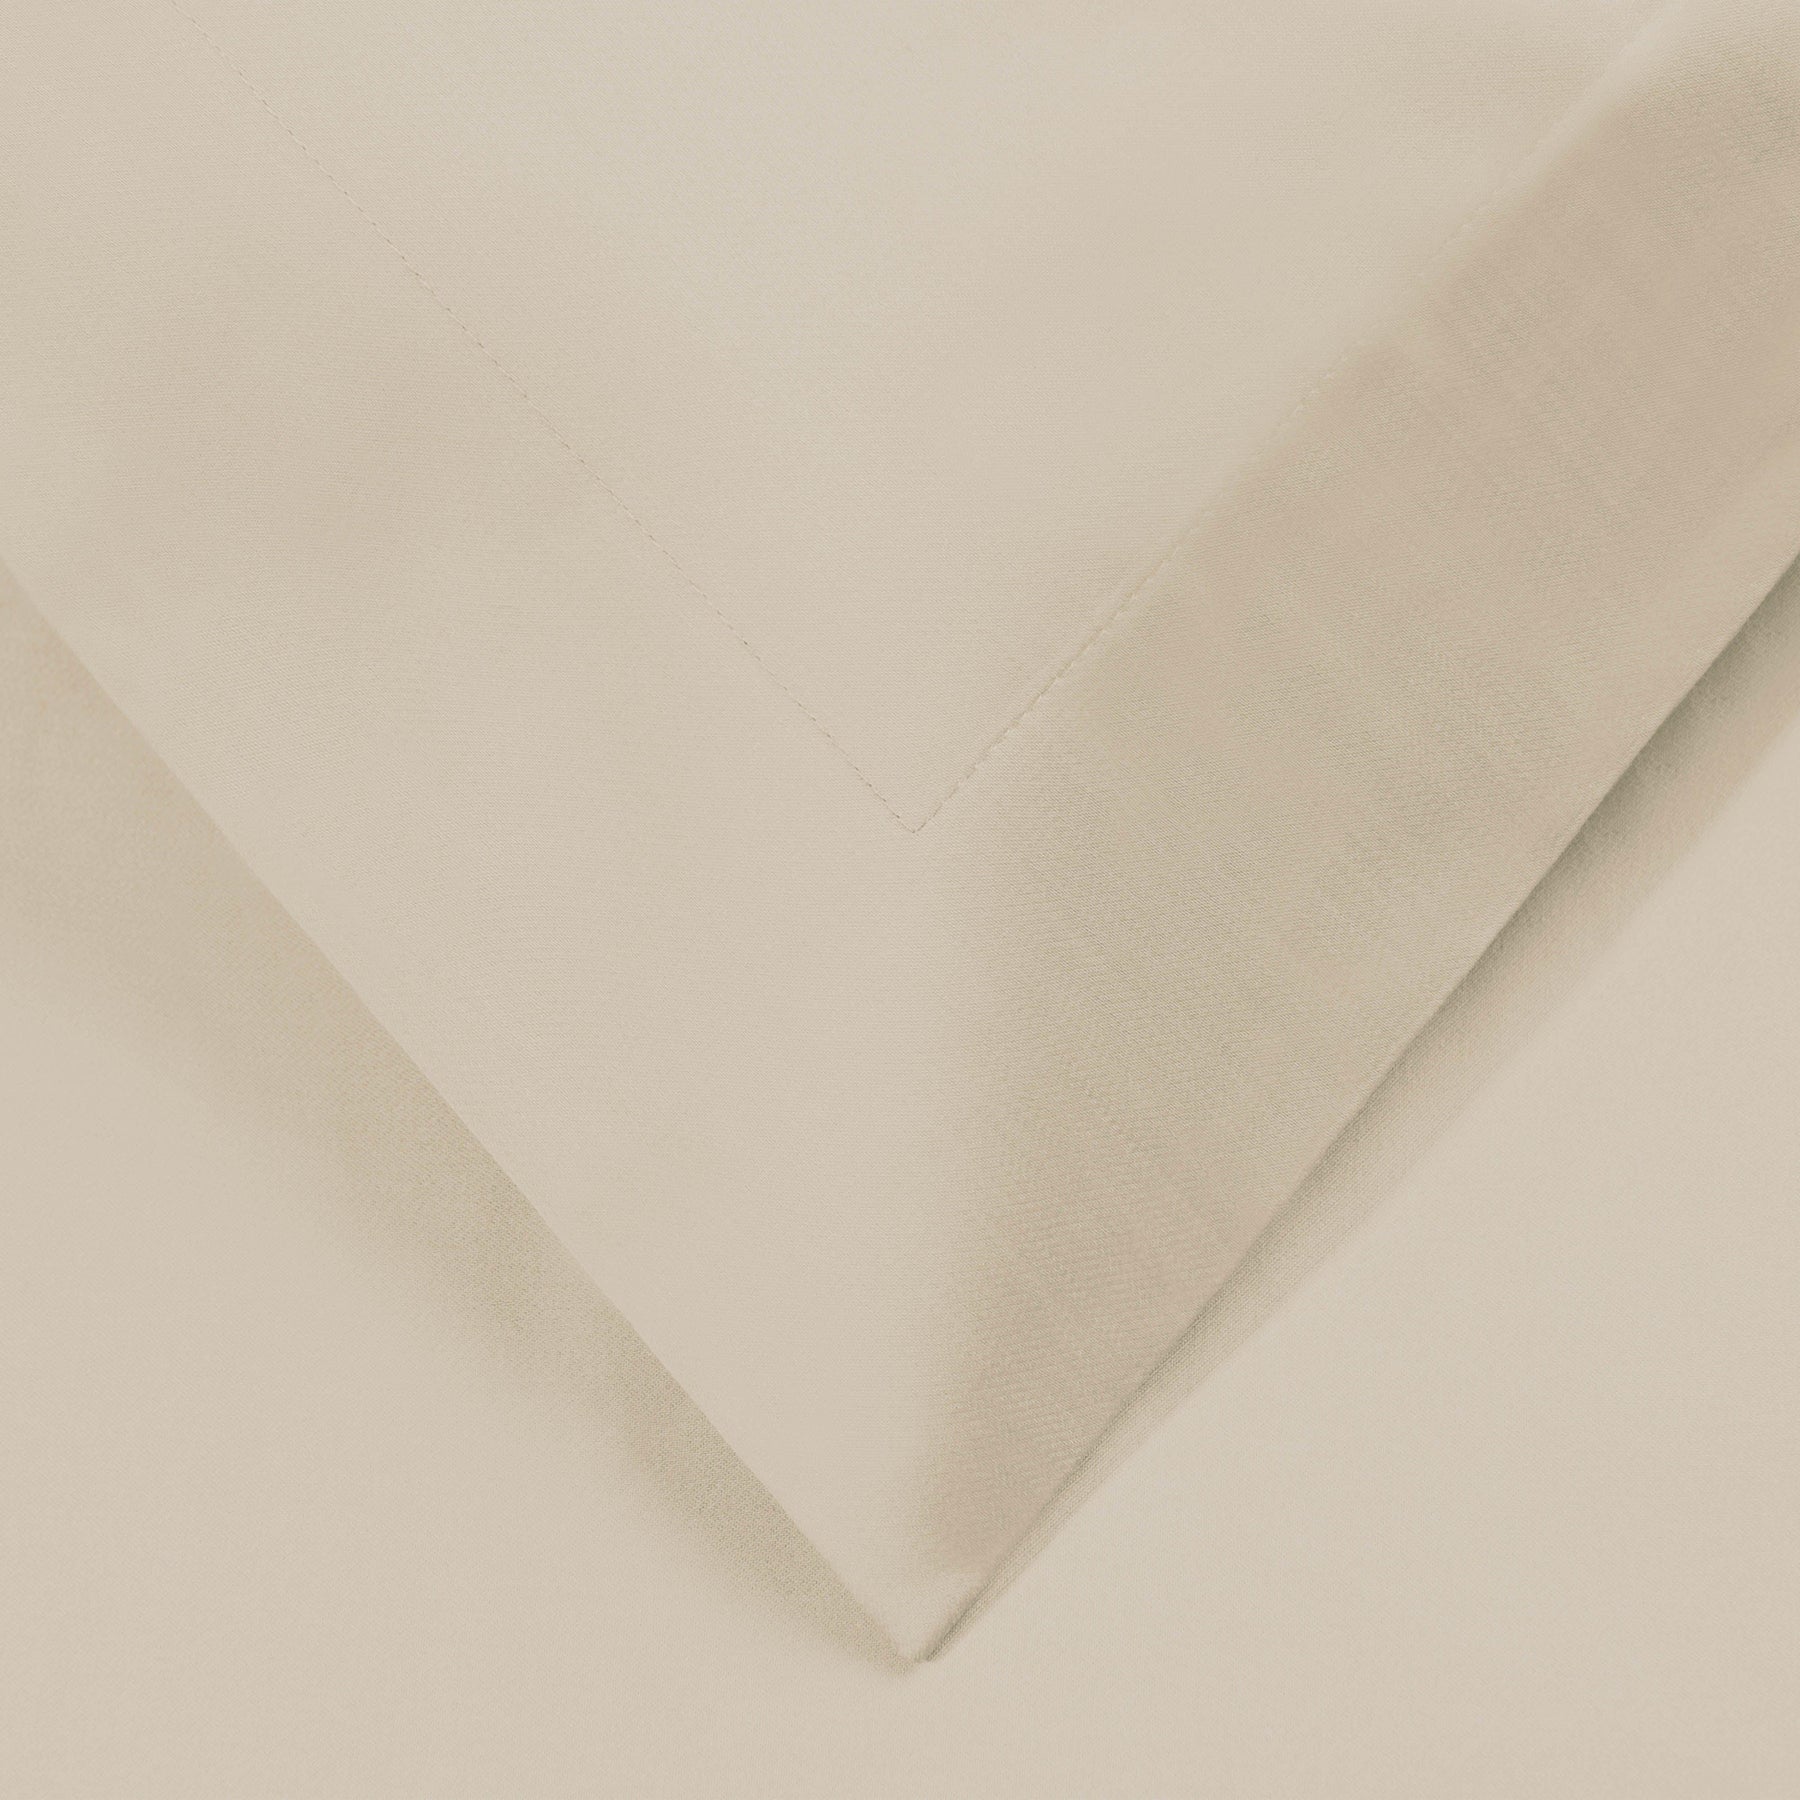  Superior Solid Egyptian Premium Cotton Duvet Cover Set -  Ivory